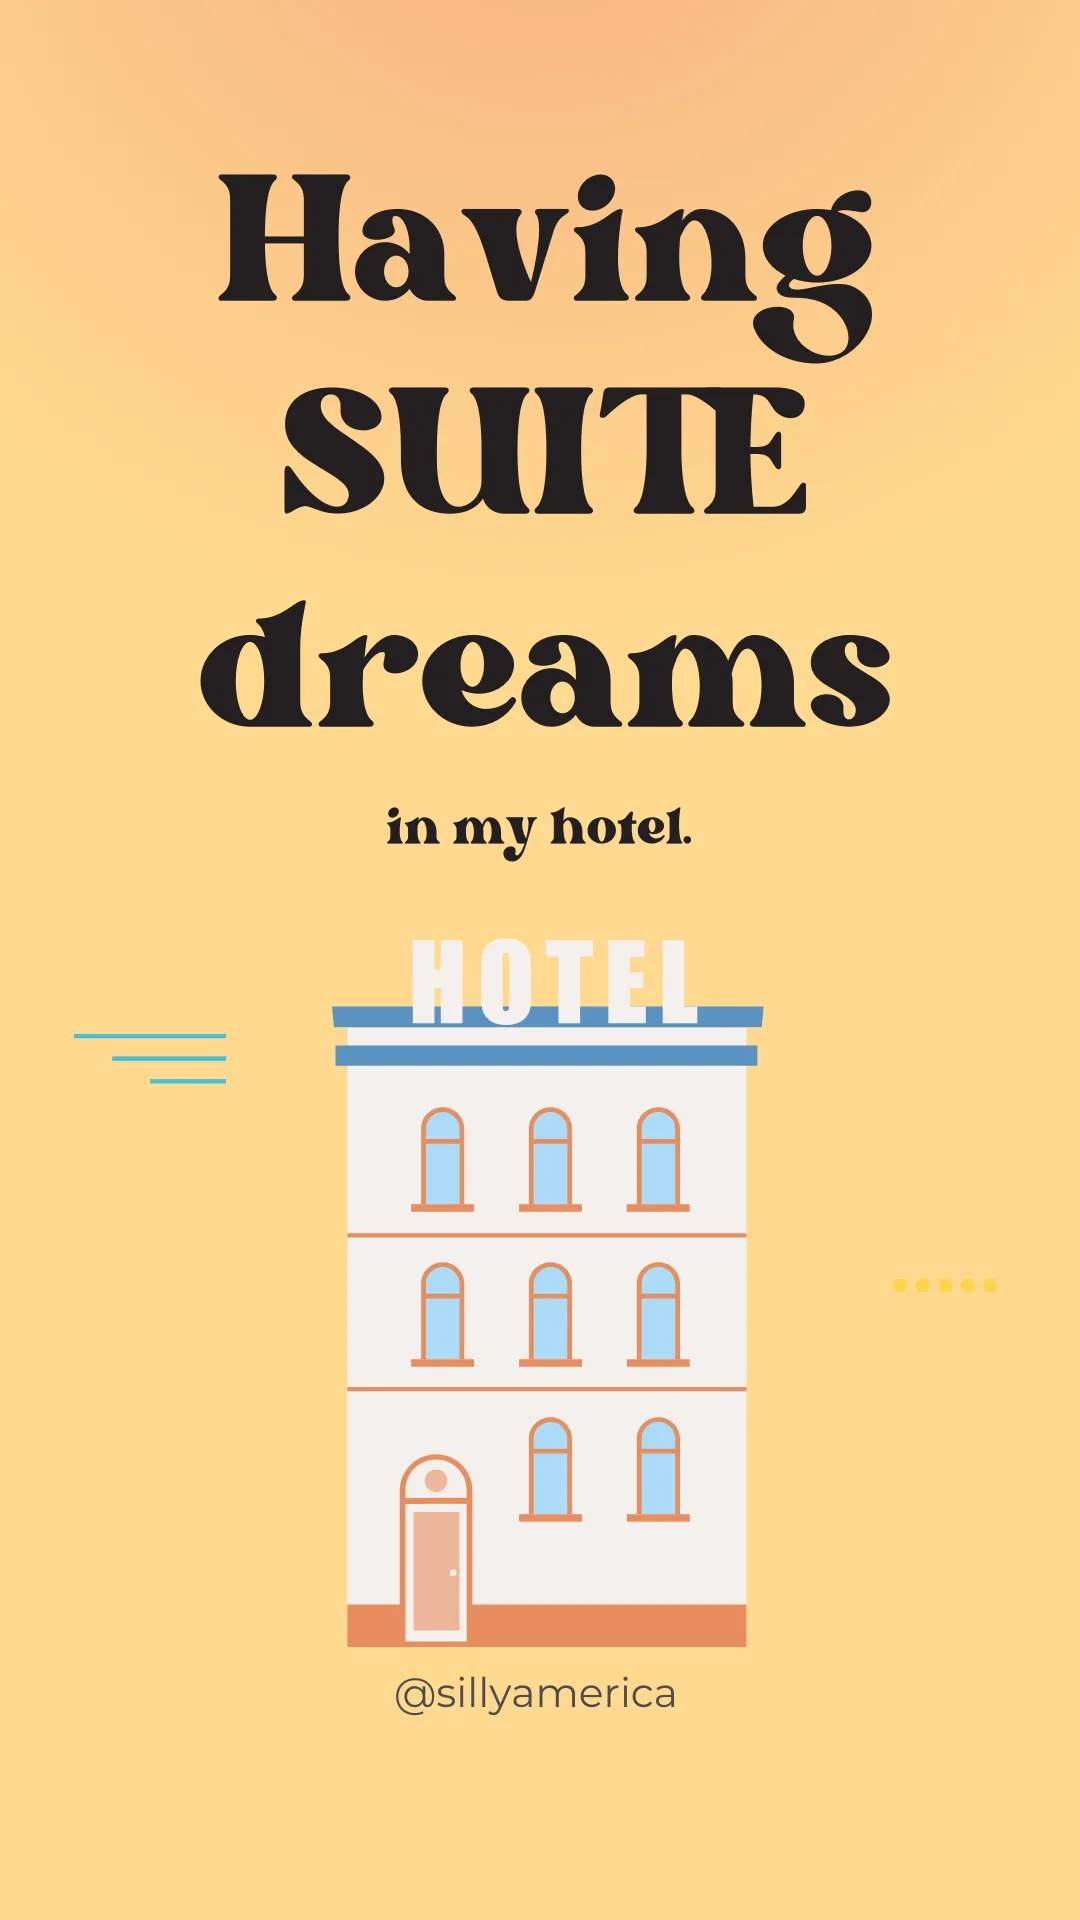 Having SUITE dreams in my hotel. - Road Trip Puns